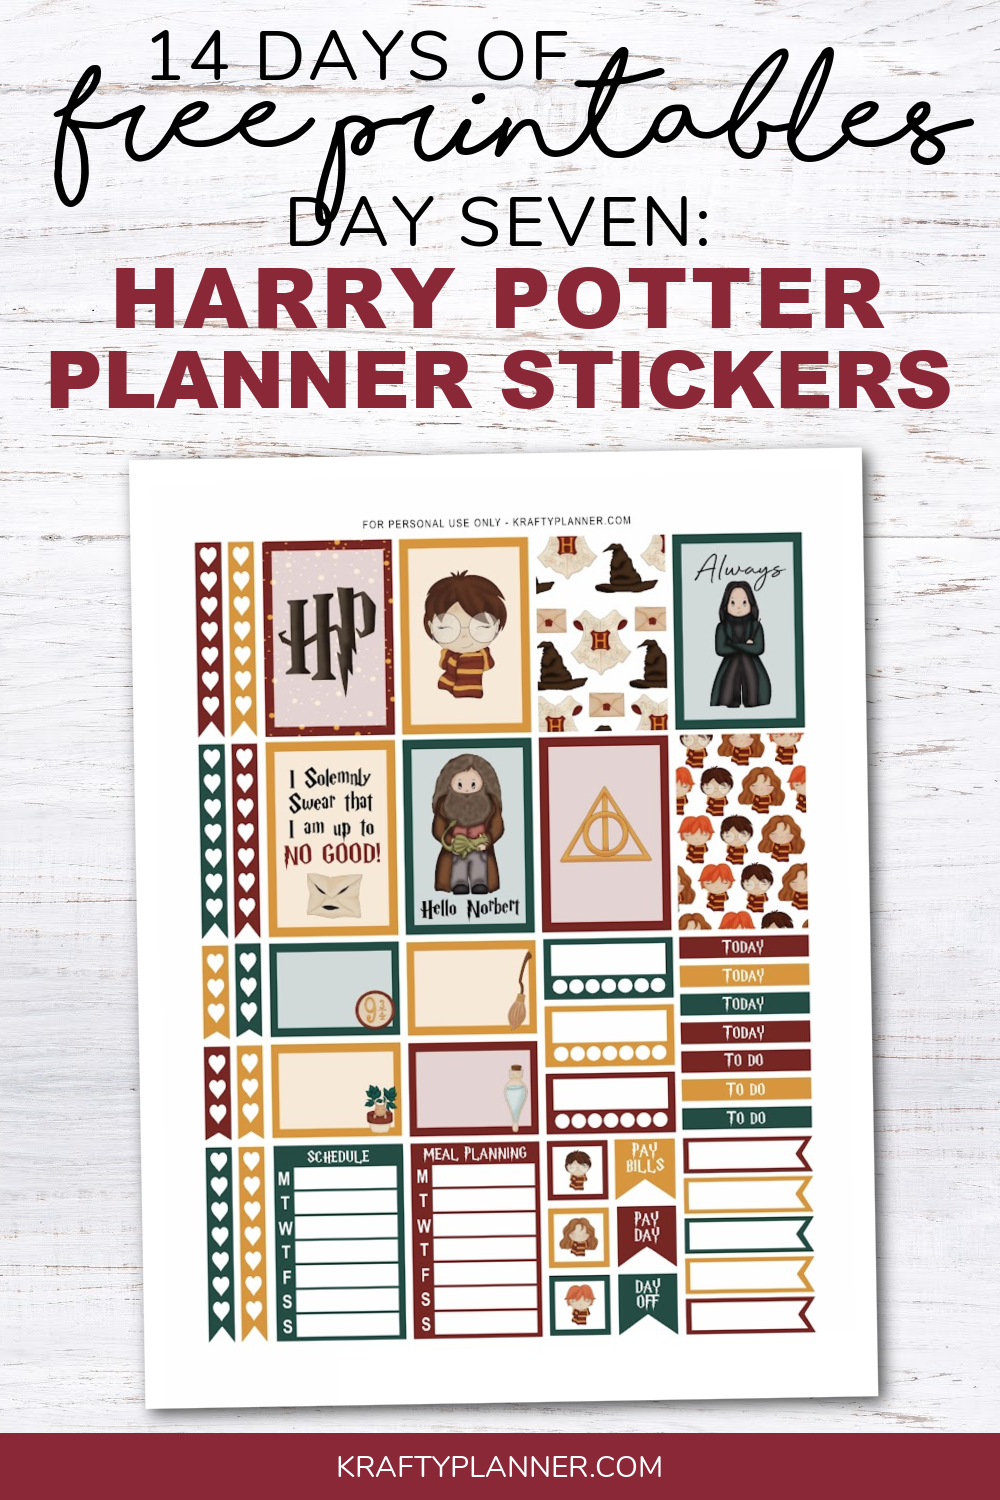 DAY 7 Free Printable Harry Potter Printable Planner Stickers Krafty Planner Harry Potter Printables Free Harry Potter Planner Printable Planner Stickers